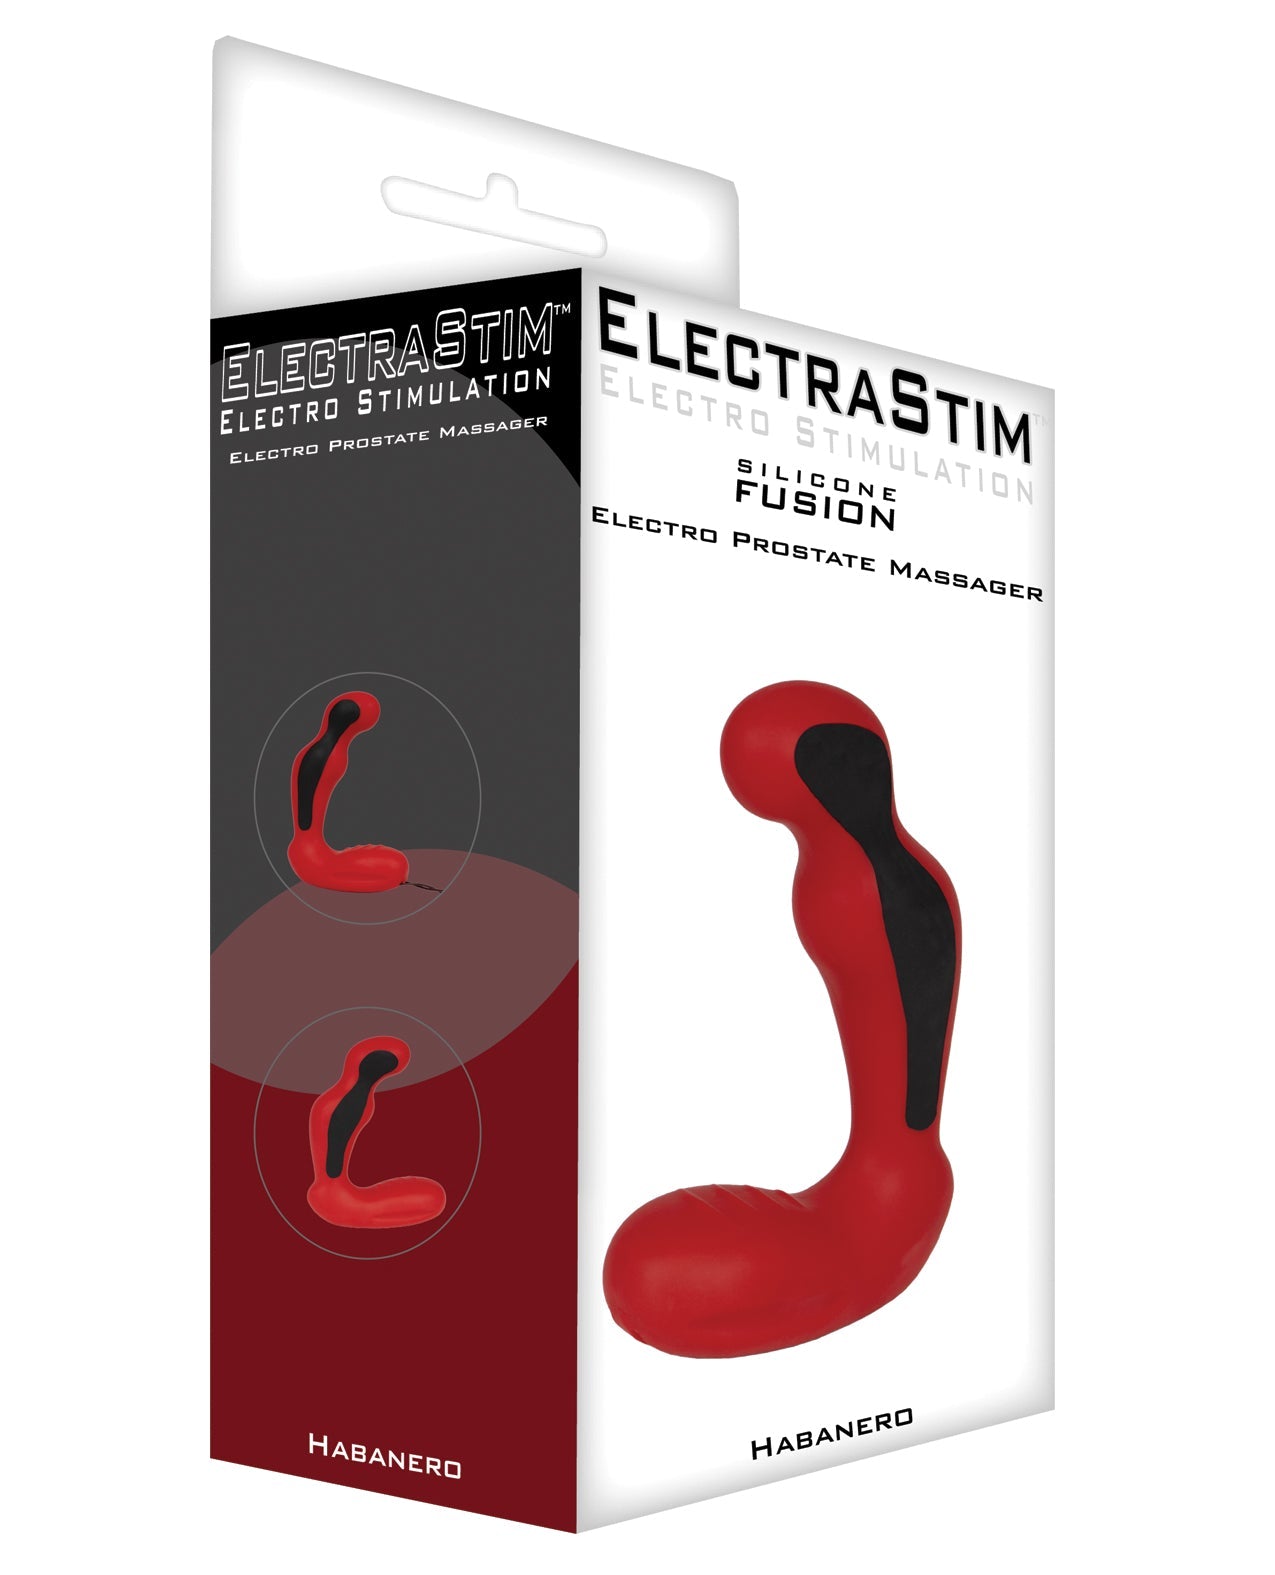 ElectraStim Silicone Fusion Habanero Prostate Massager - Red/Black